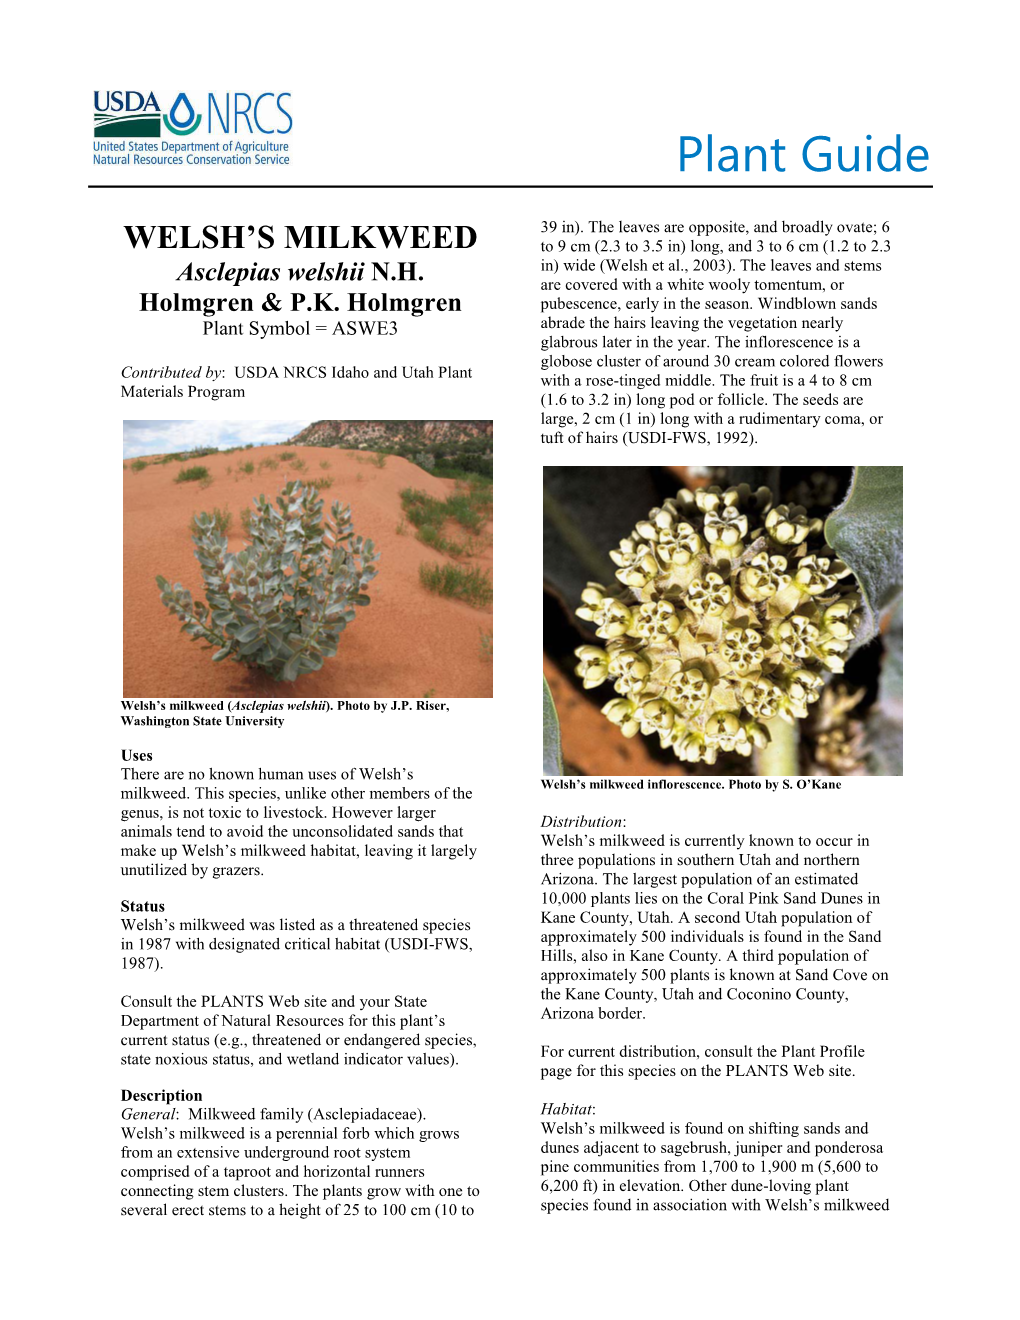 Plant Guide for Welsh's Milkweed (Asclepias Welshii)